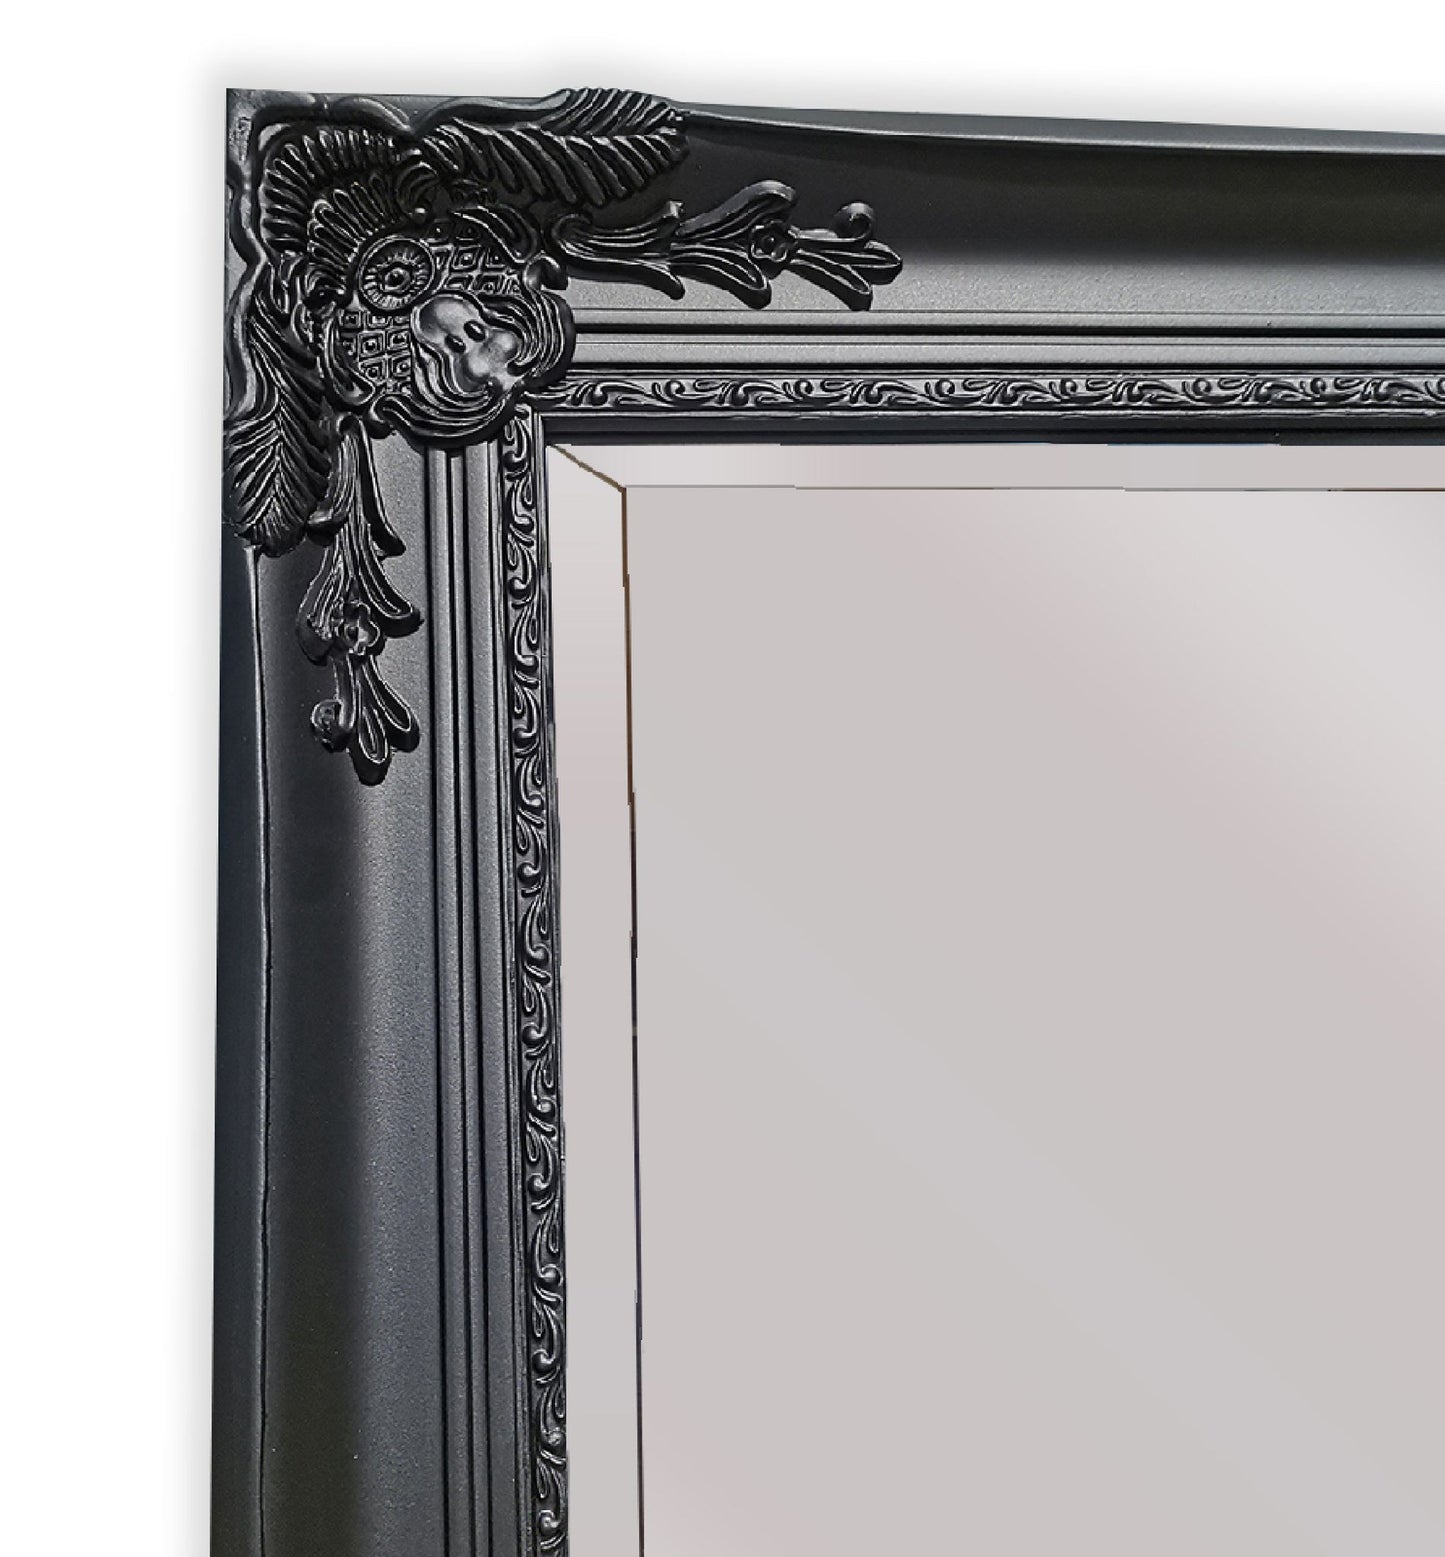 French Provincial Ornate Mirror - Black - Medium 70cm x 170cm - image2